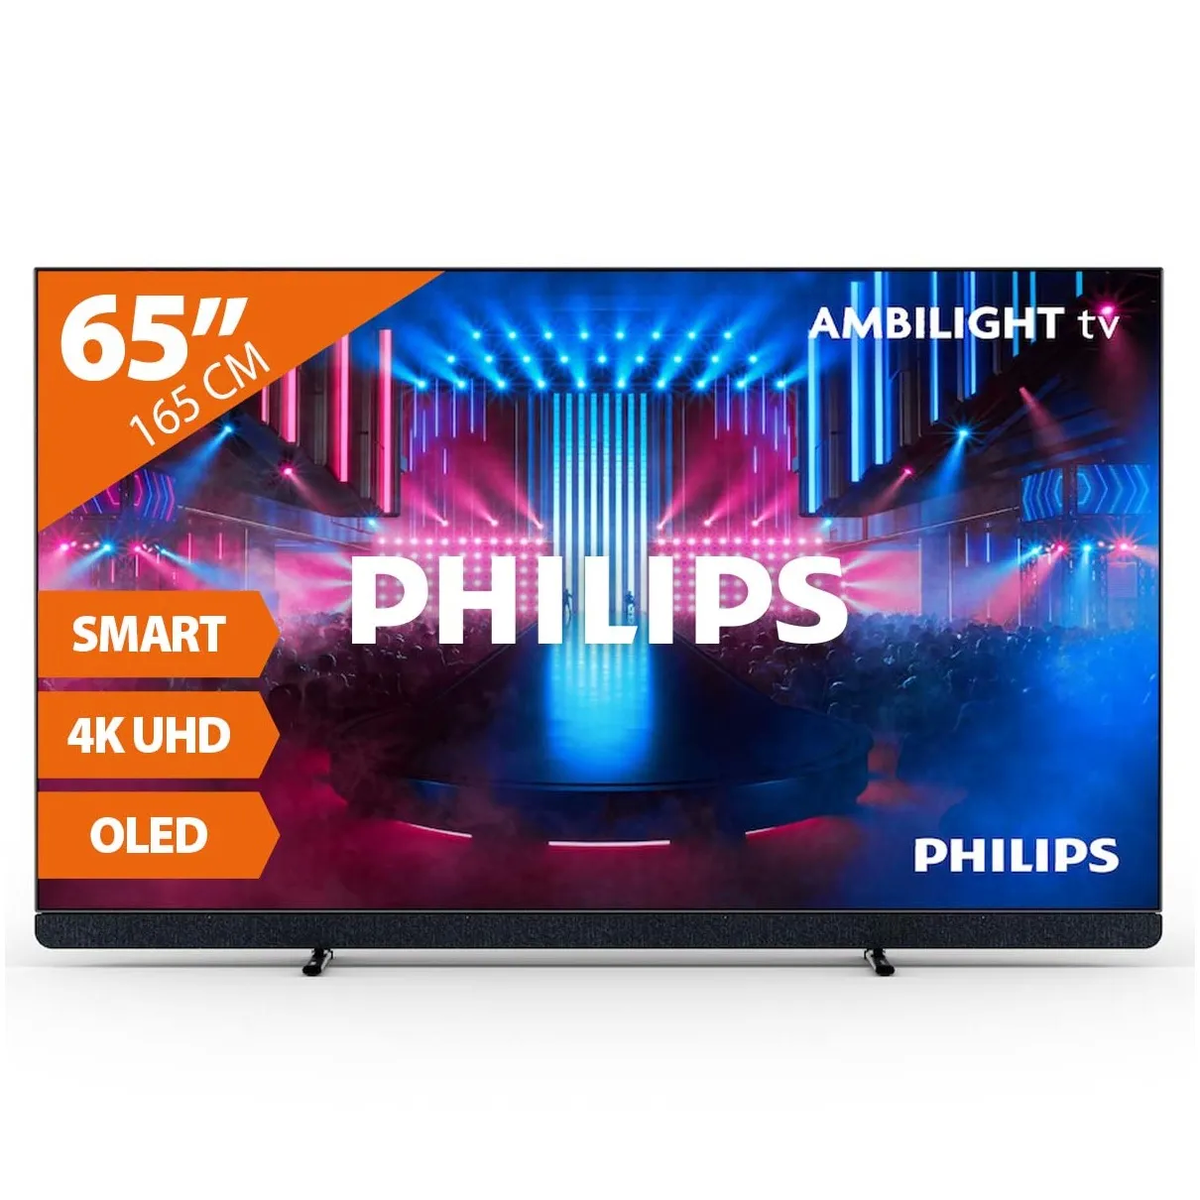 Philips 65OLED909/12 OLED Smart Televisie met Bowers en Wilkens soundbar ingebouwd